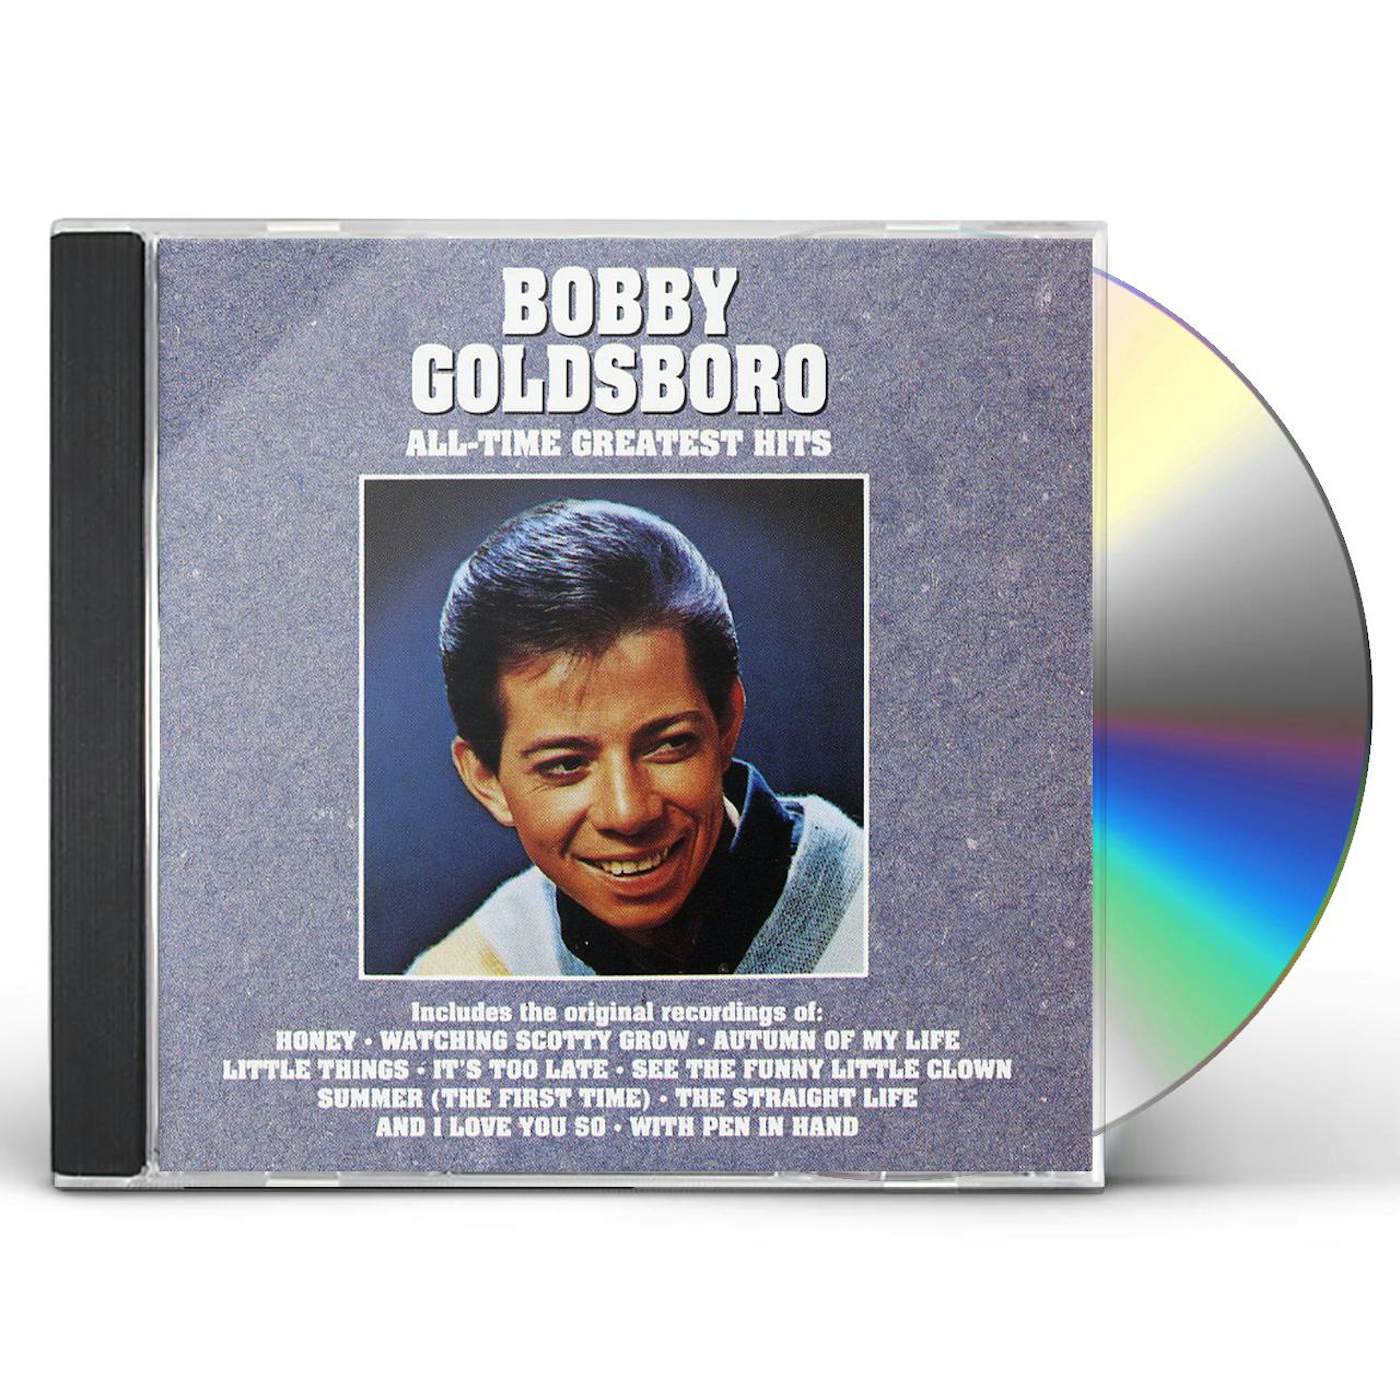 Bobby Goldsboro ALL-TIME GREATEST HITS CD